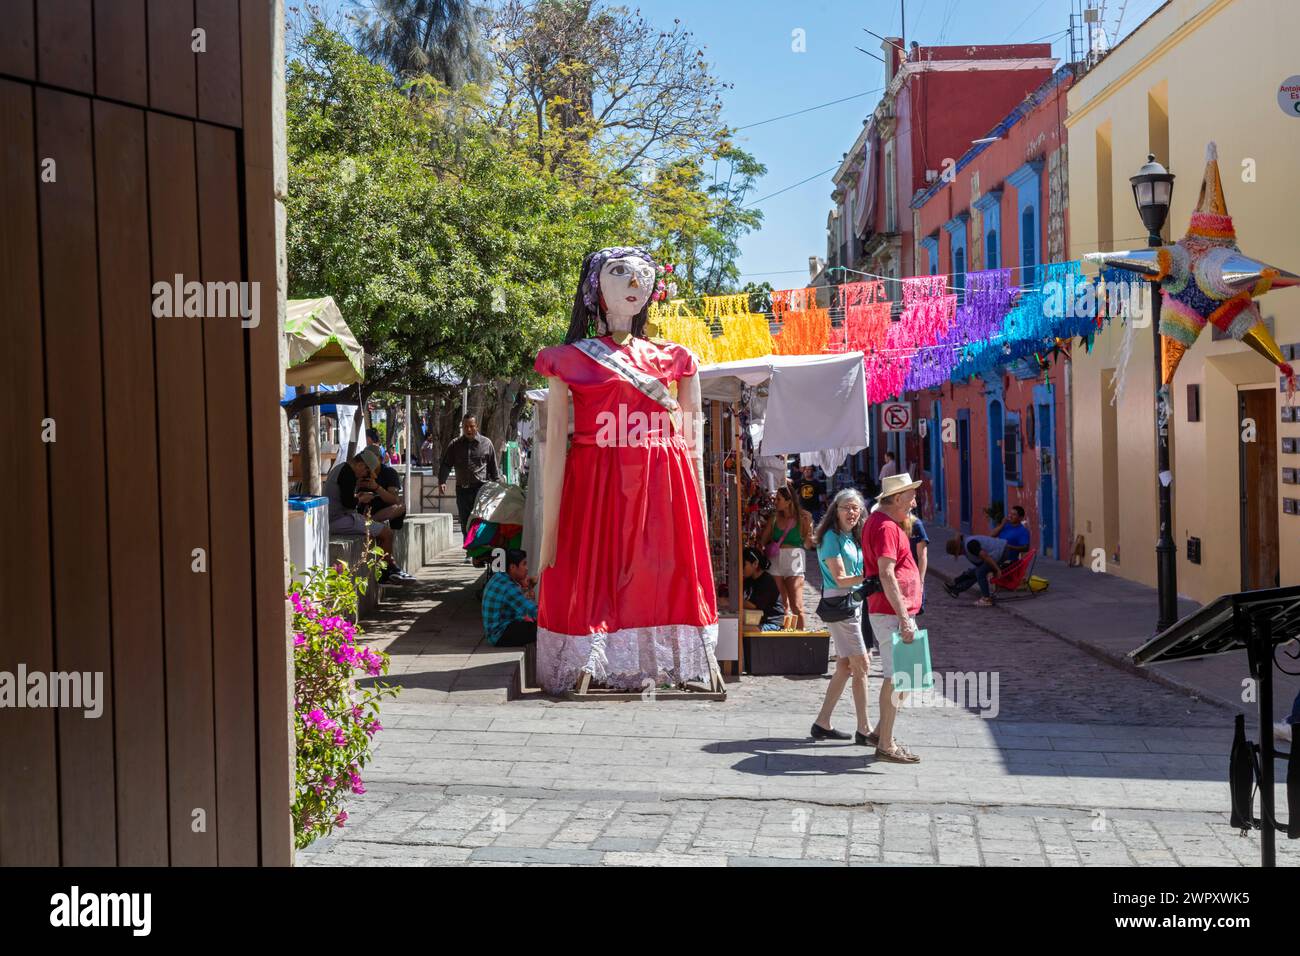 Oaxaca, Mexico - A giant papier mache puppet at a street market. Stock Photo